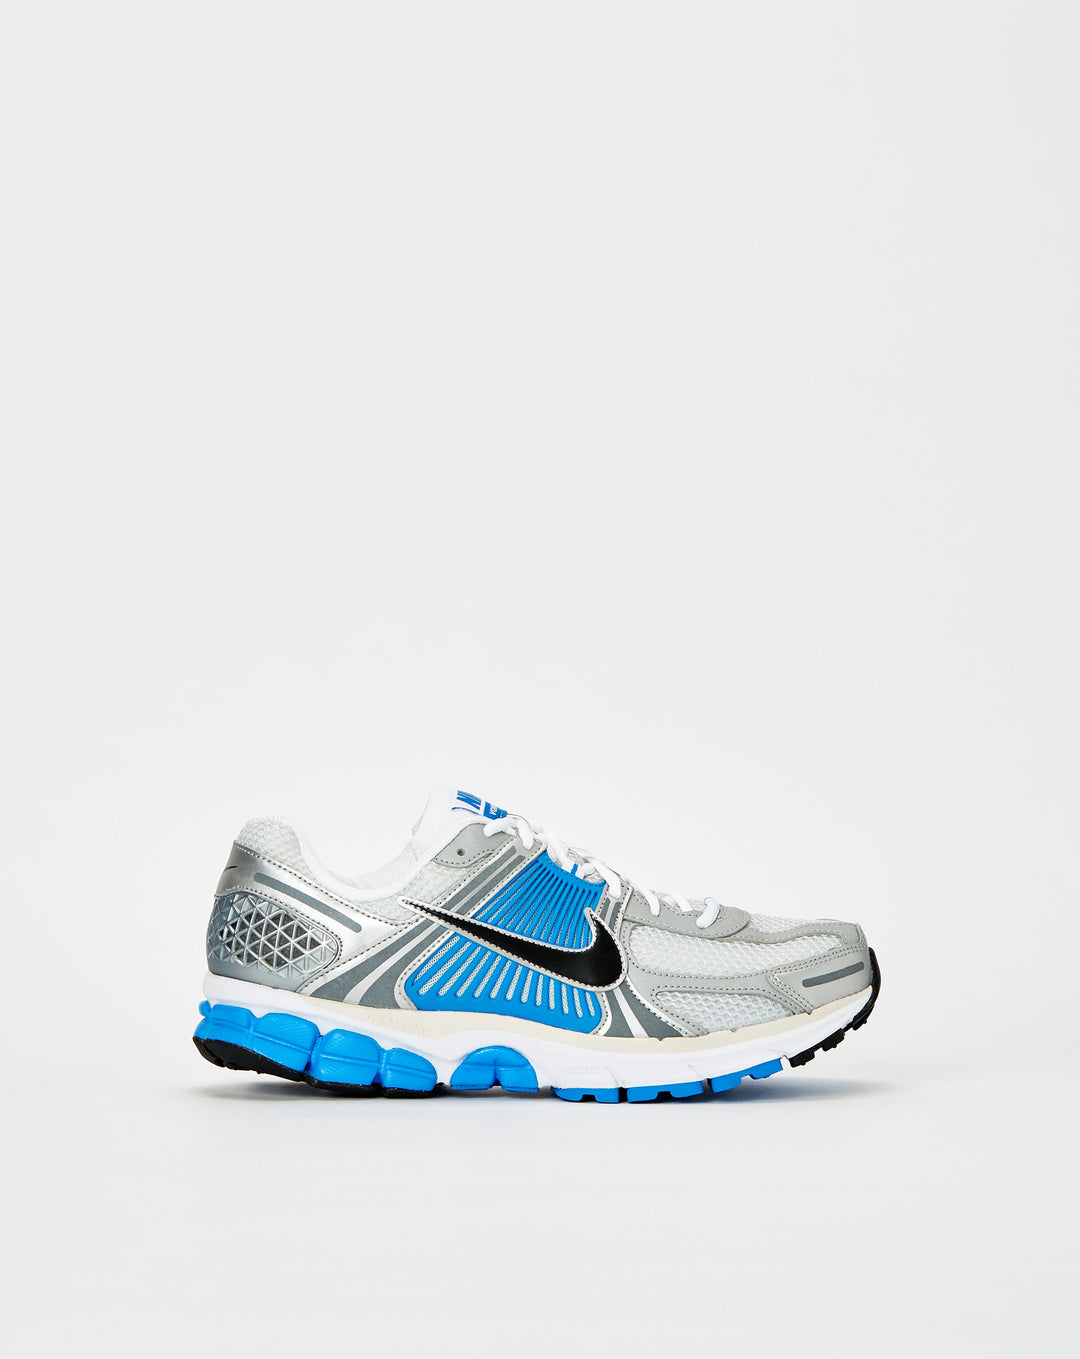 Nike Nike Air Max 1 SC Jewel Atomic Teal Arriving to Retailers  - Cheap Urlfreeze Jordan outlet